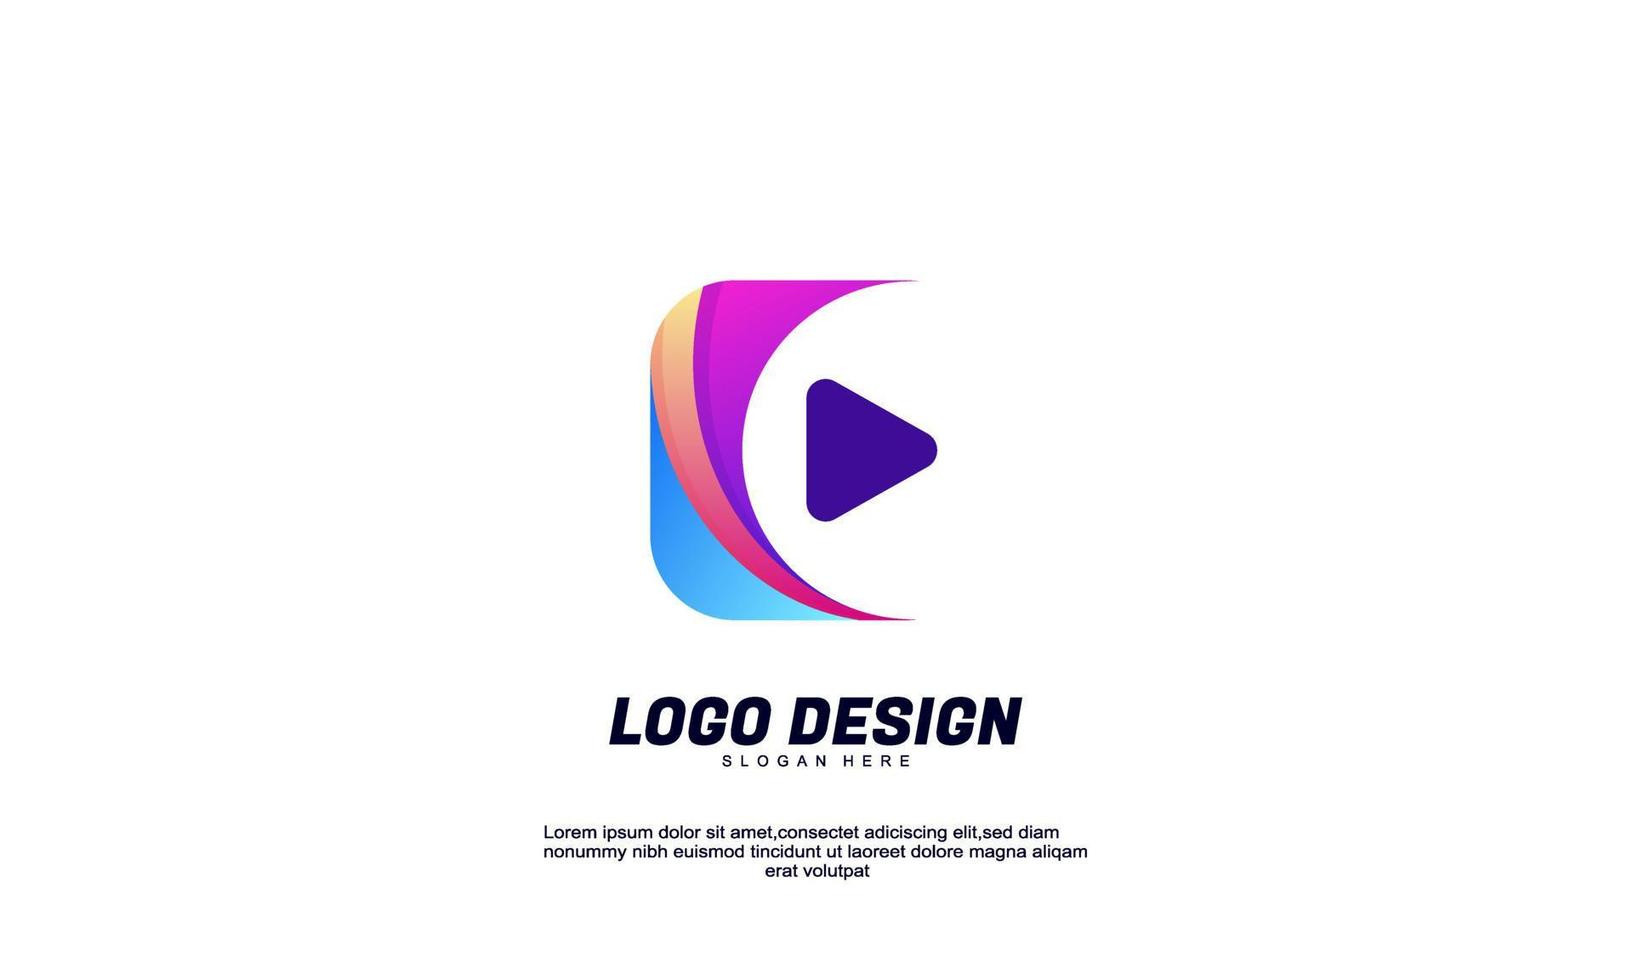 stock vector resumen idea creativa rectángulo play media logo para negocio o empresa con plantilla de diseño colorido